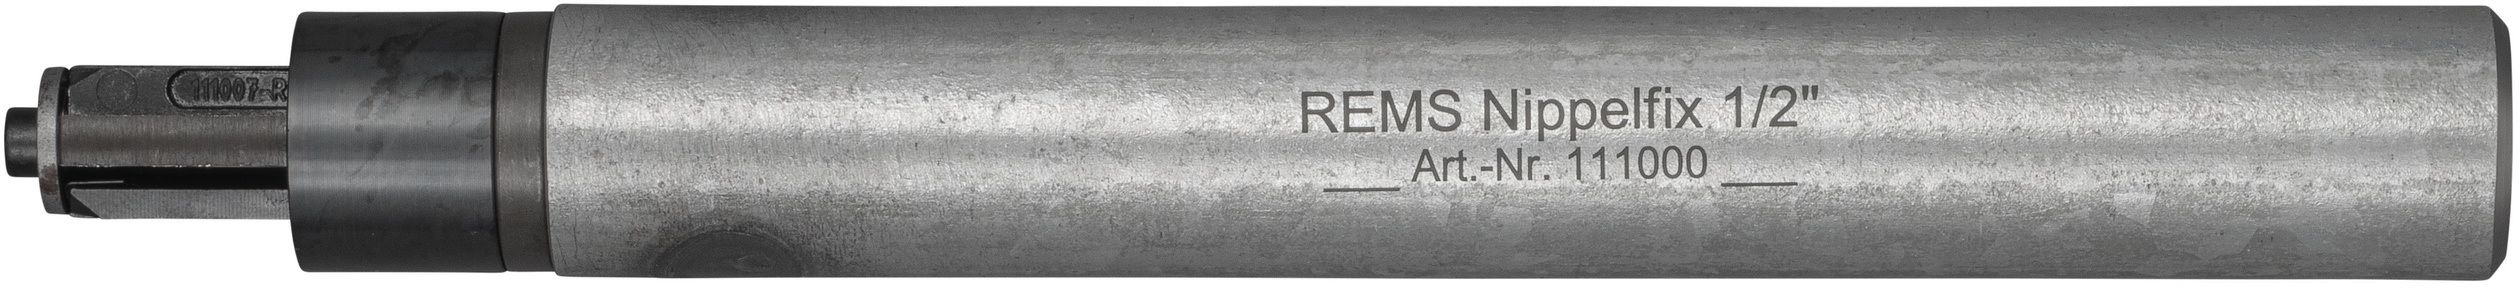 REMS Nippelfix 111500, 2" - Sanitärwerkzeuge